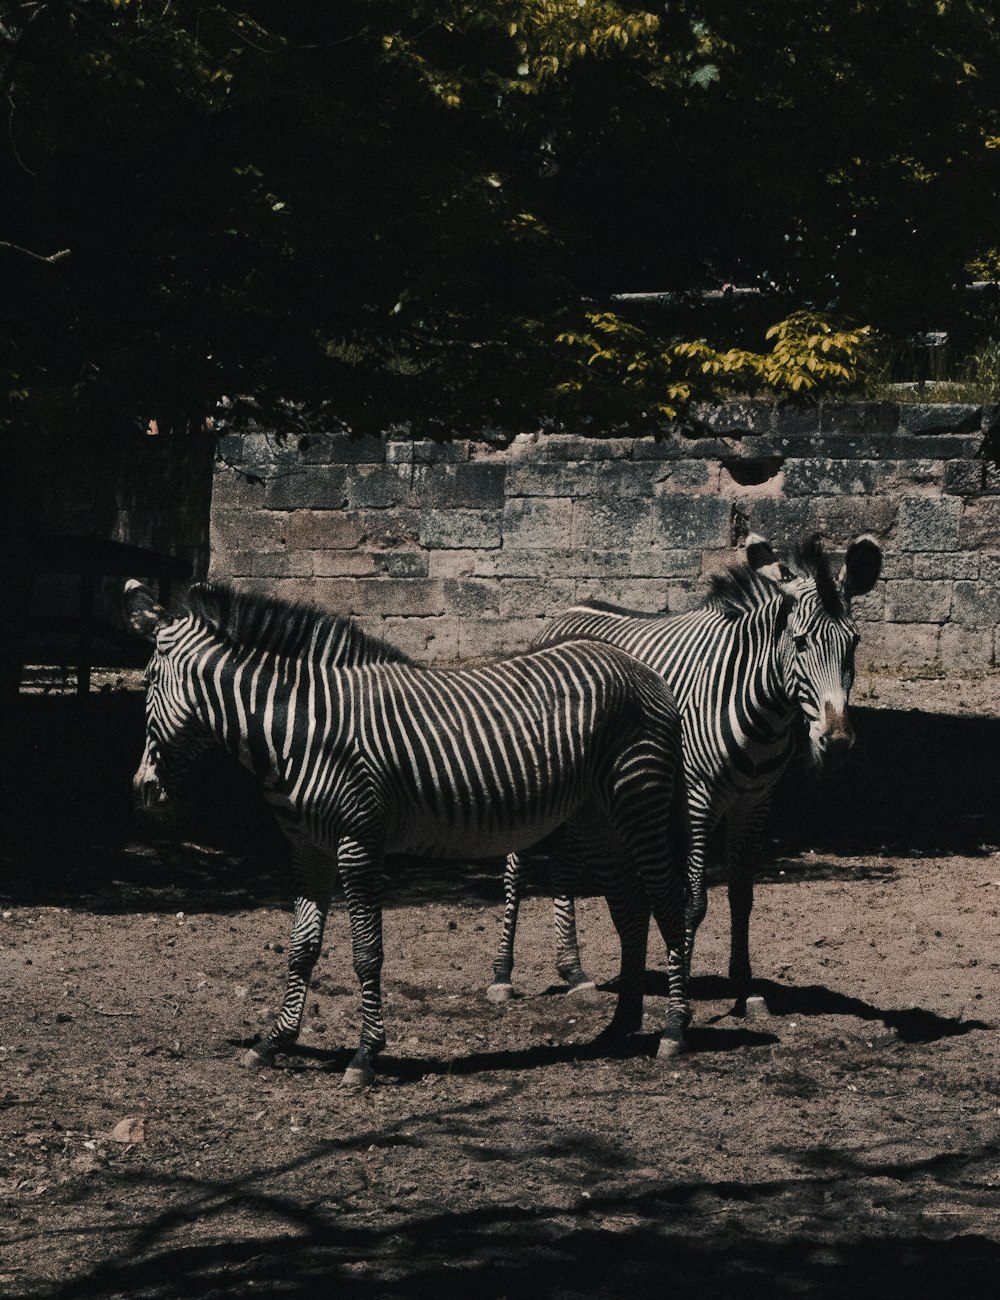 zebra standing on brown soil during daytime